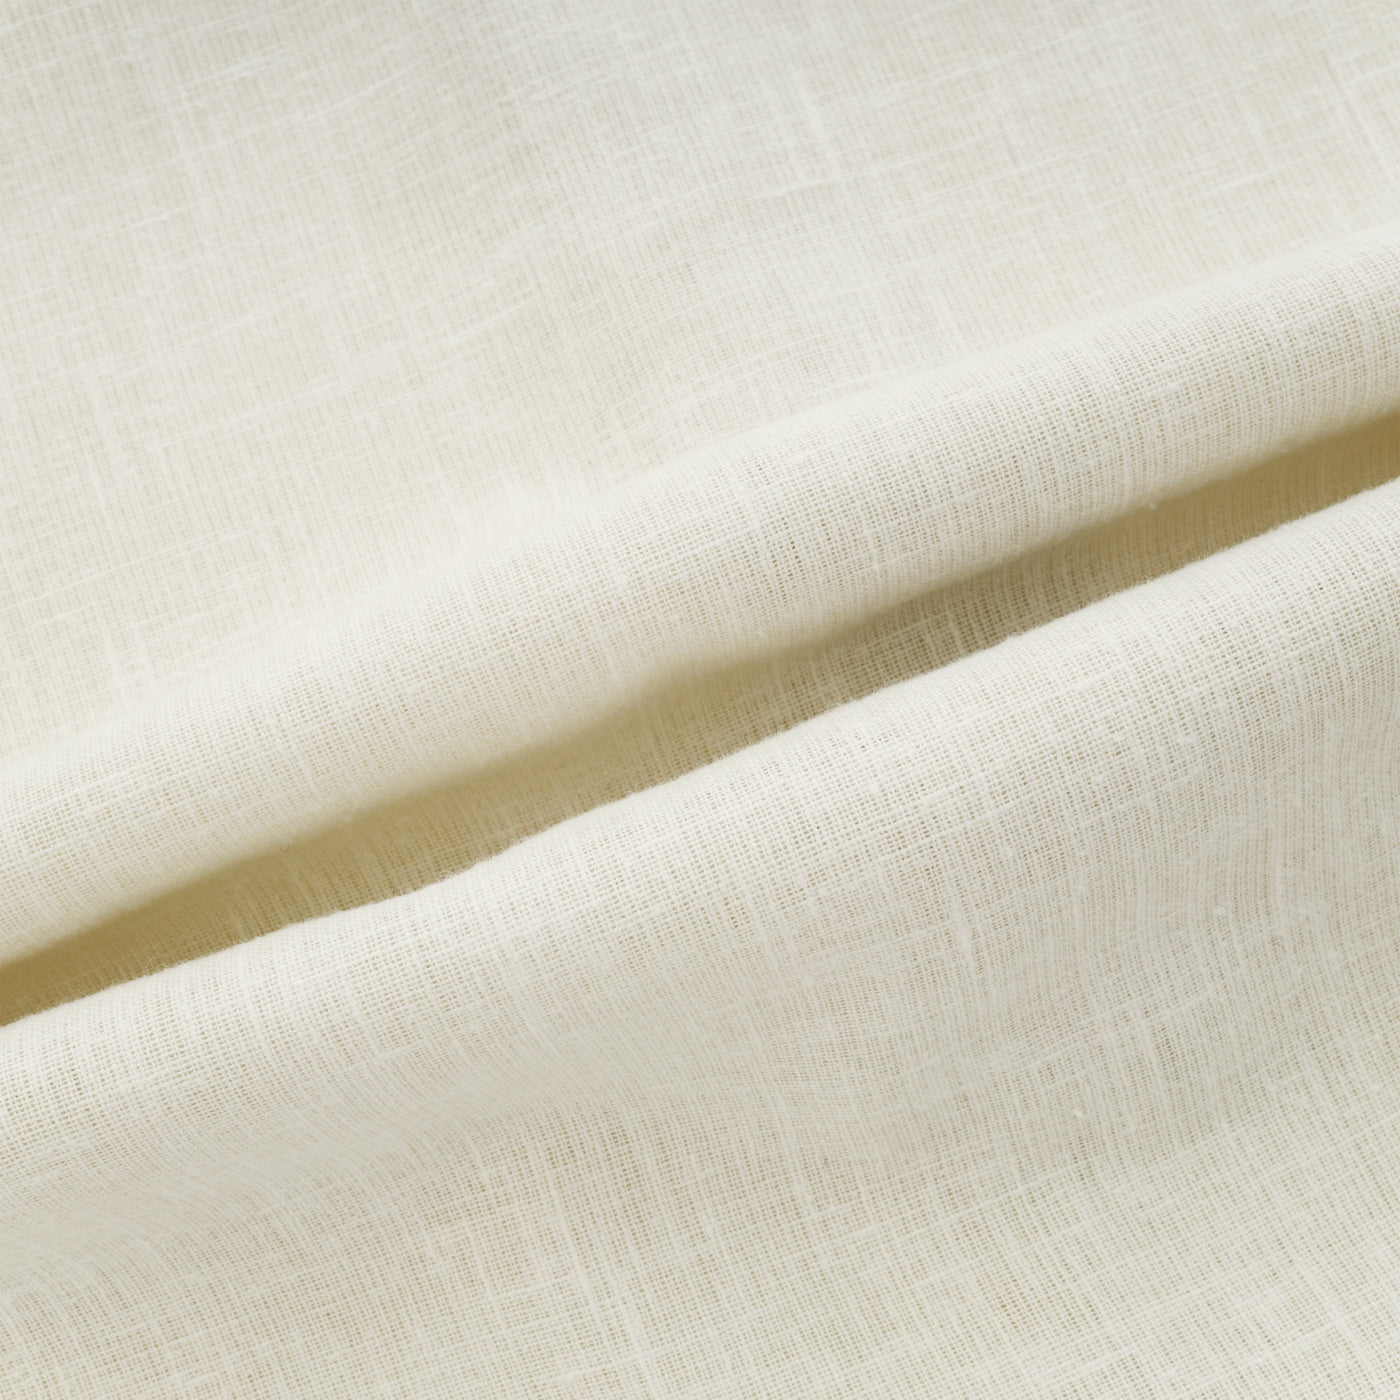 Jacquard Ivory Linen Casual Shirt